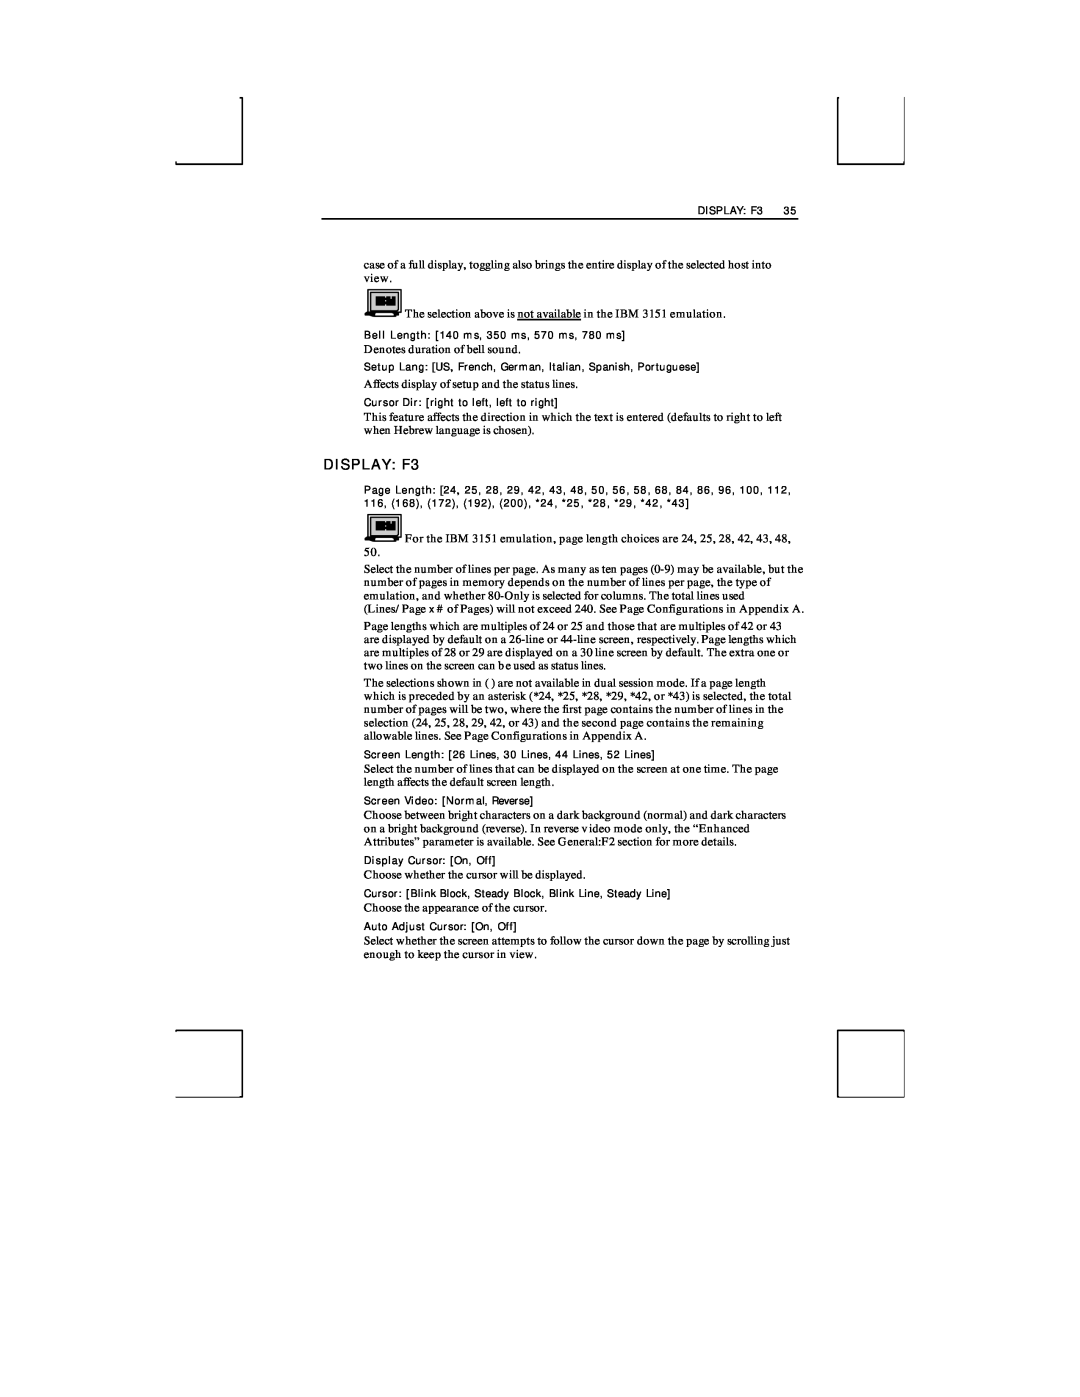 Boundless Technologies ADDS 3153 ASCII manual DISPLAY F3 